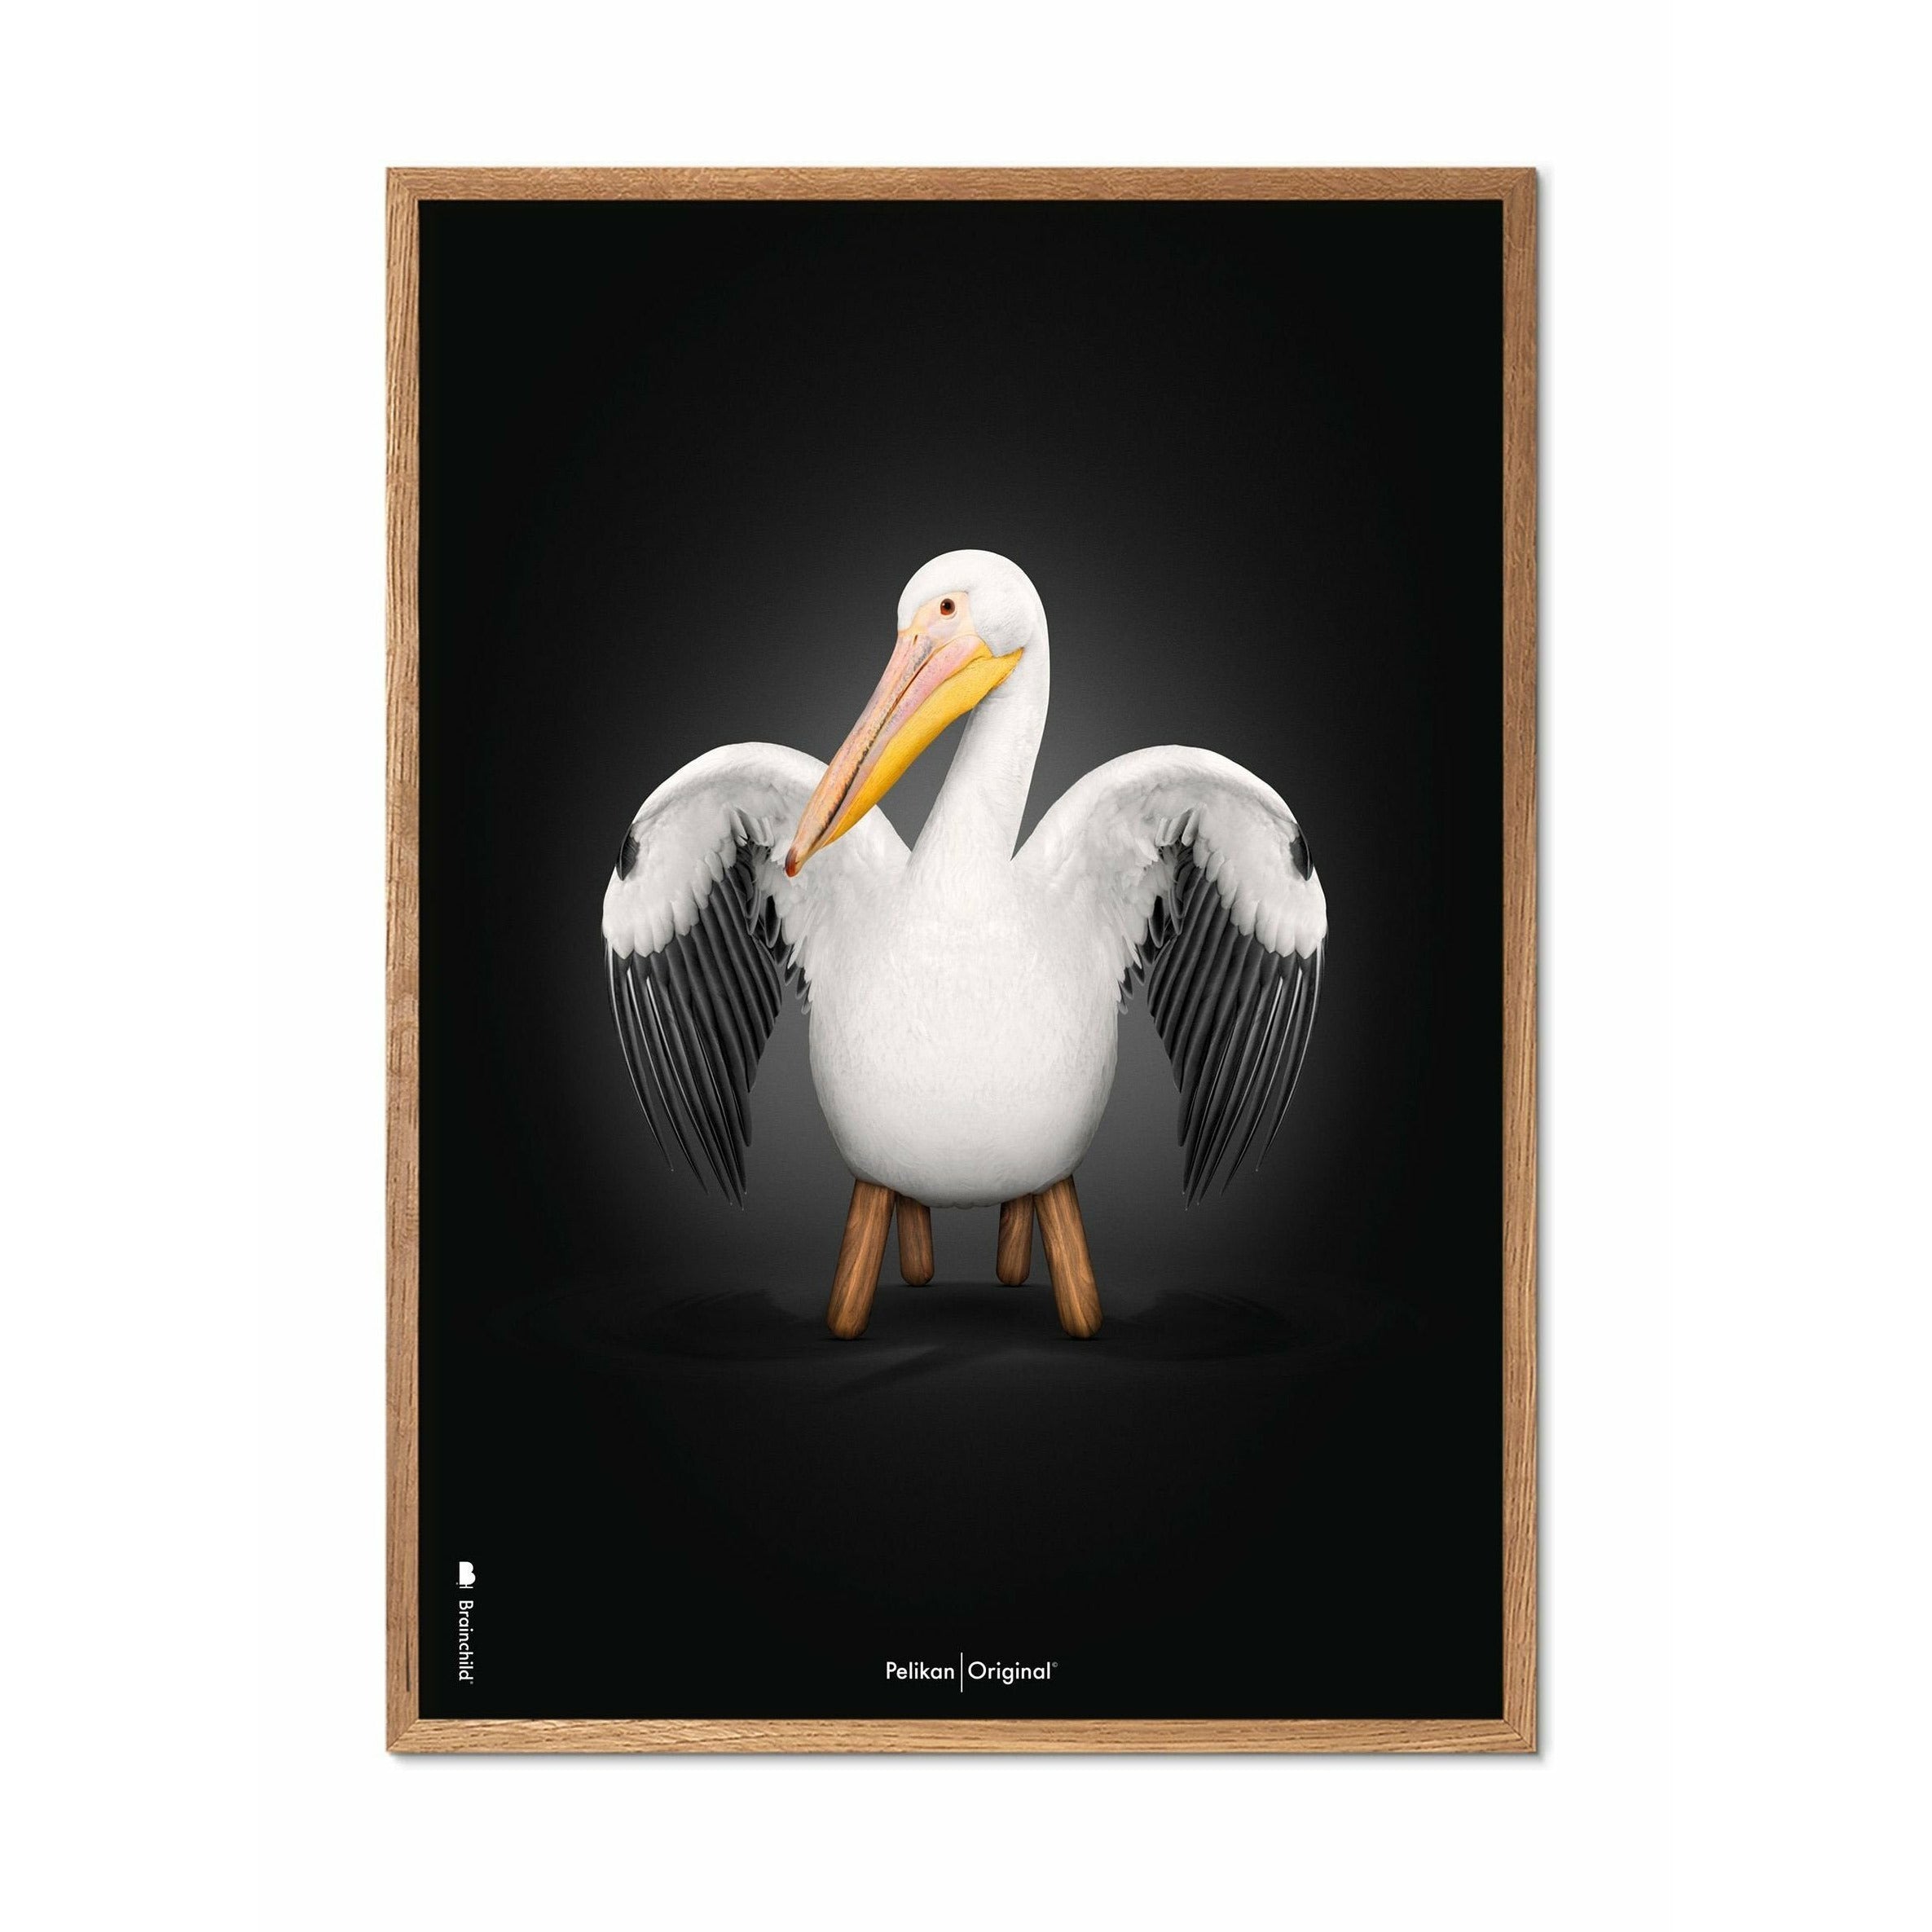 Brainchild Pelikan Classic Poster, Frame Made Of Light Wood 70x100 Cm, Black Background